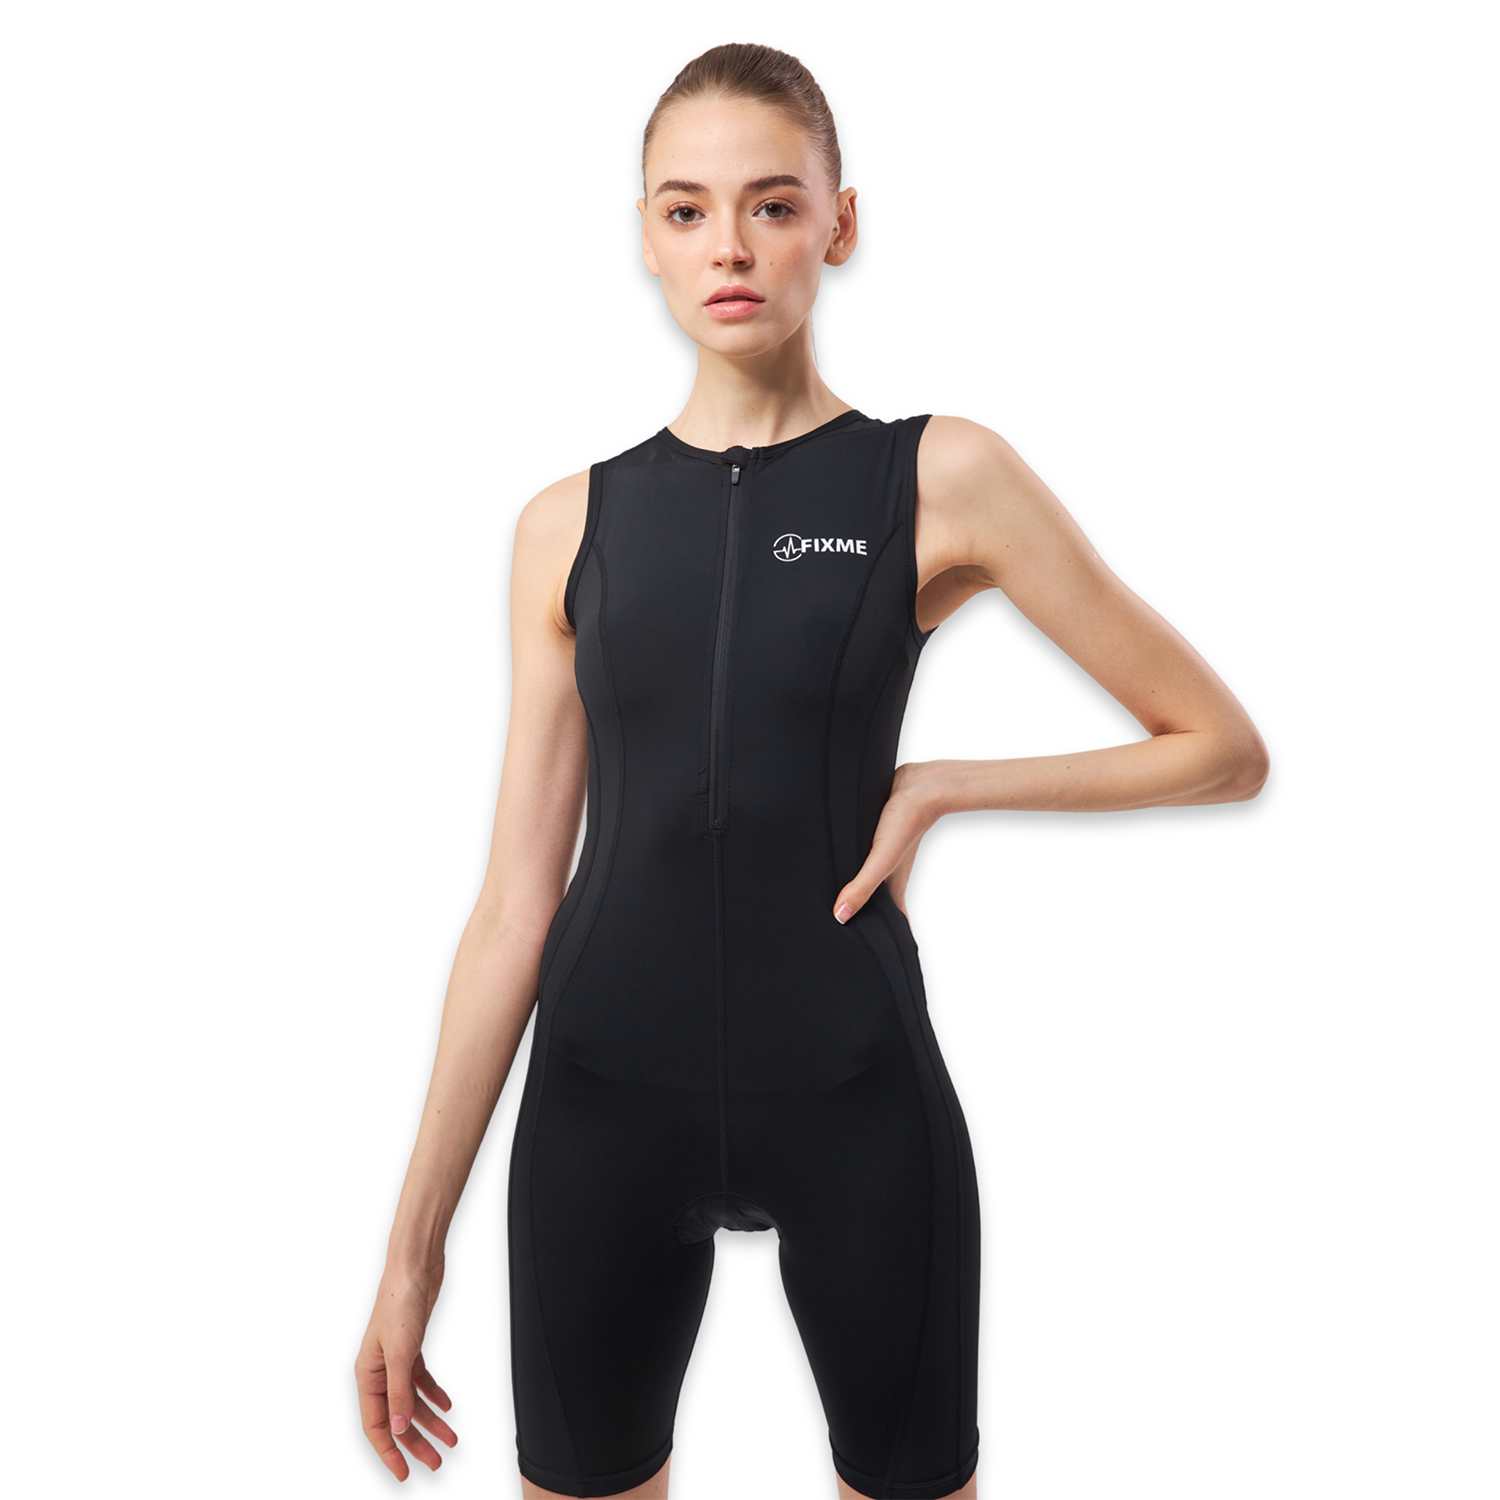 Triathlon Suit   ชุดไตรกีฬา  ผู้หญิง